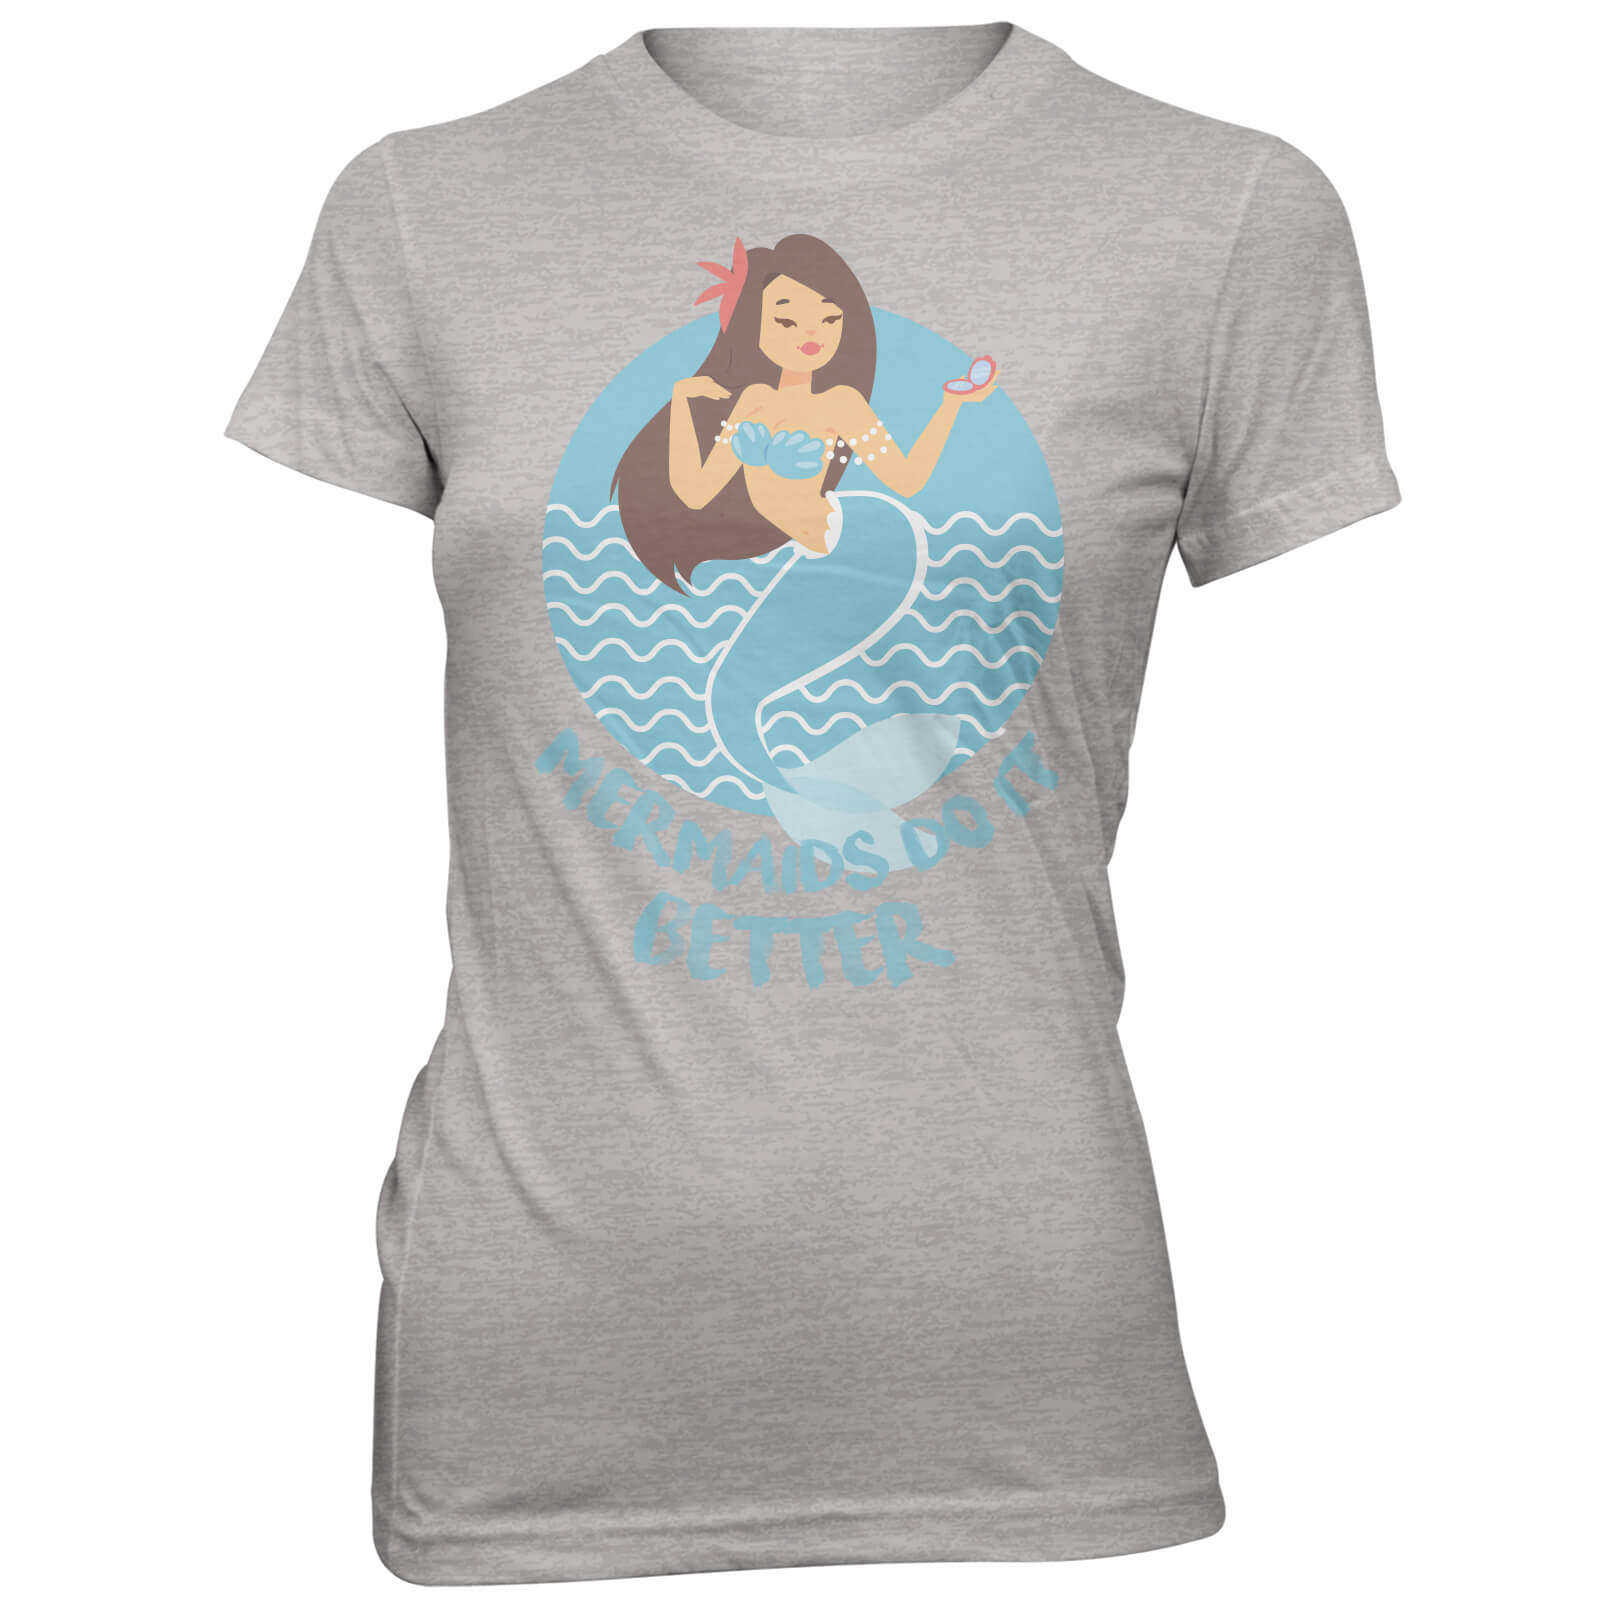 Mermaids Do It Better Women's Grey T-Shirt - S - Grey